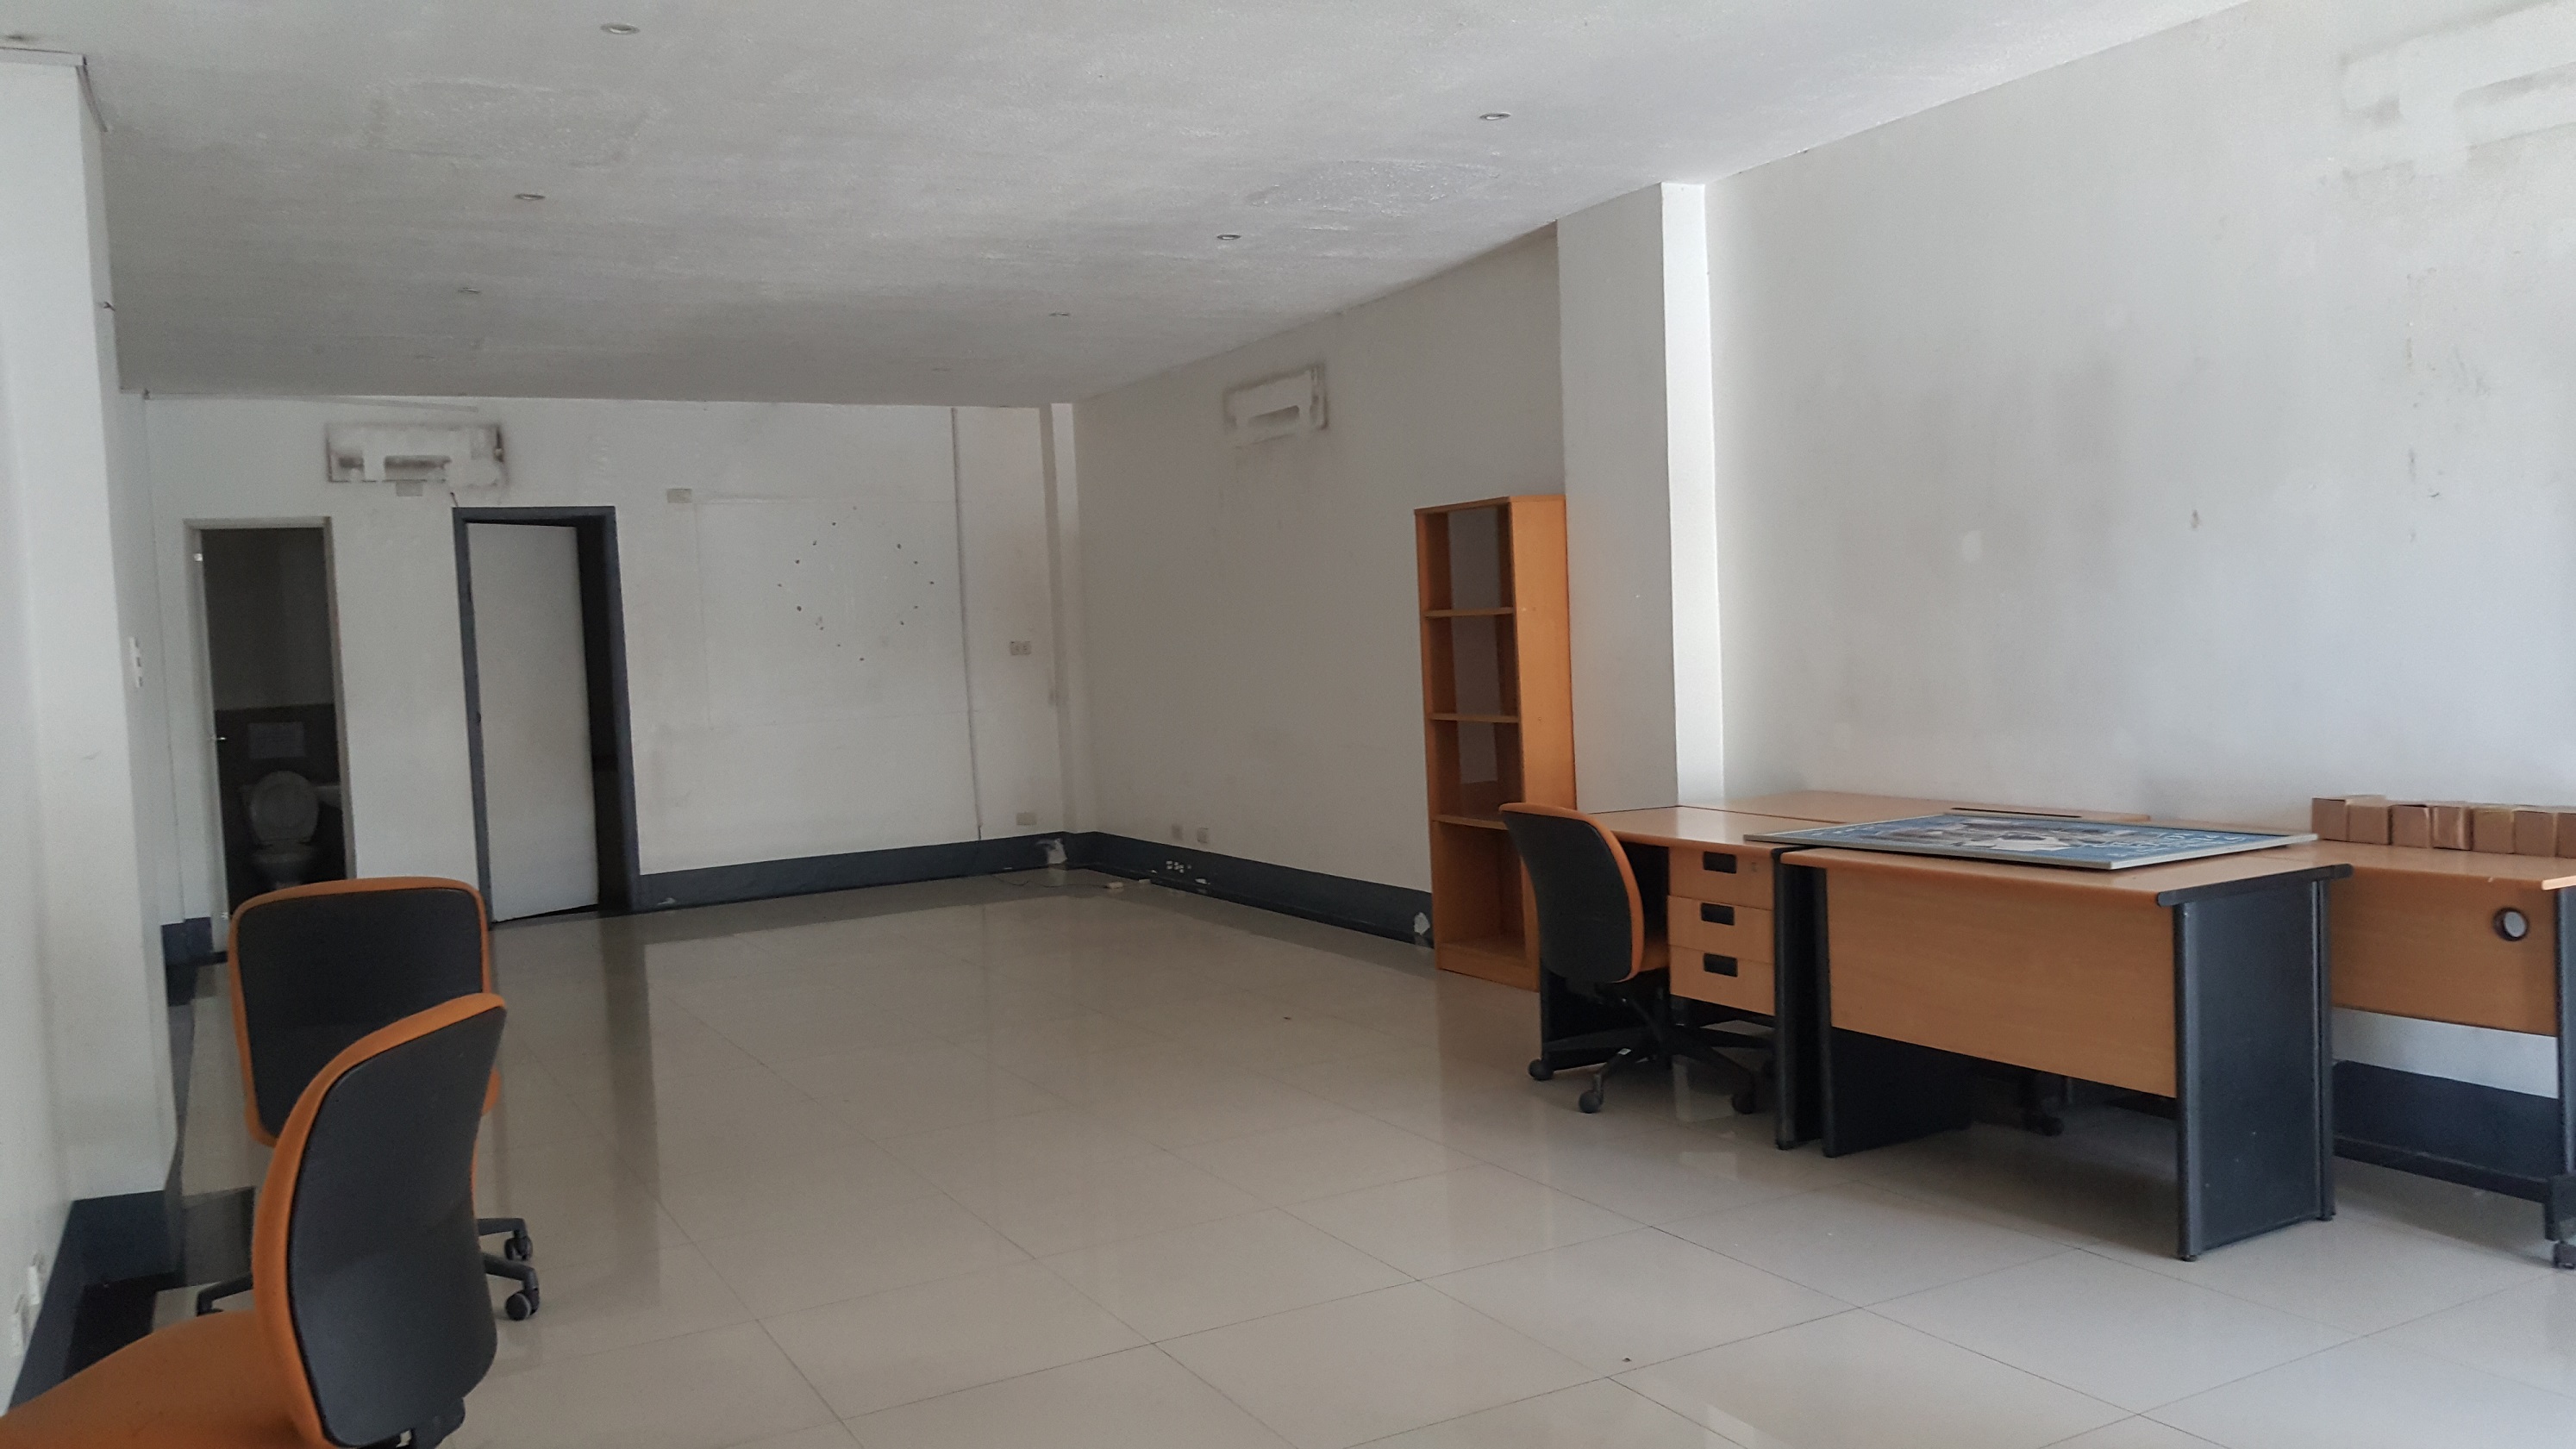 65-square-meters-office-space-in-gorordo-avenue-cebu-city